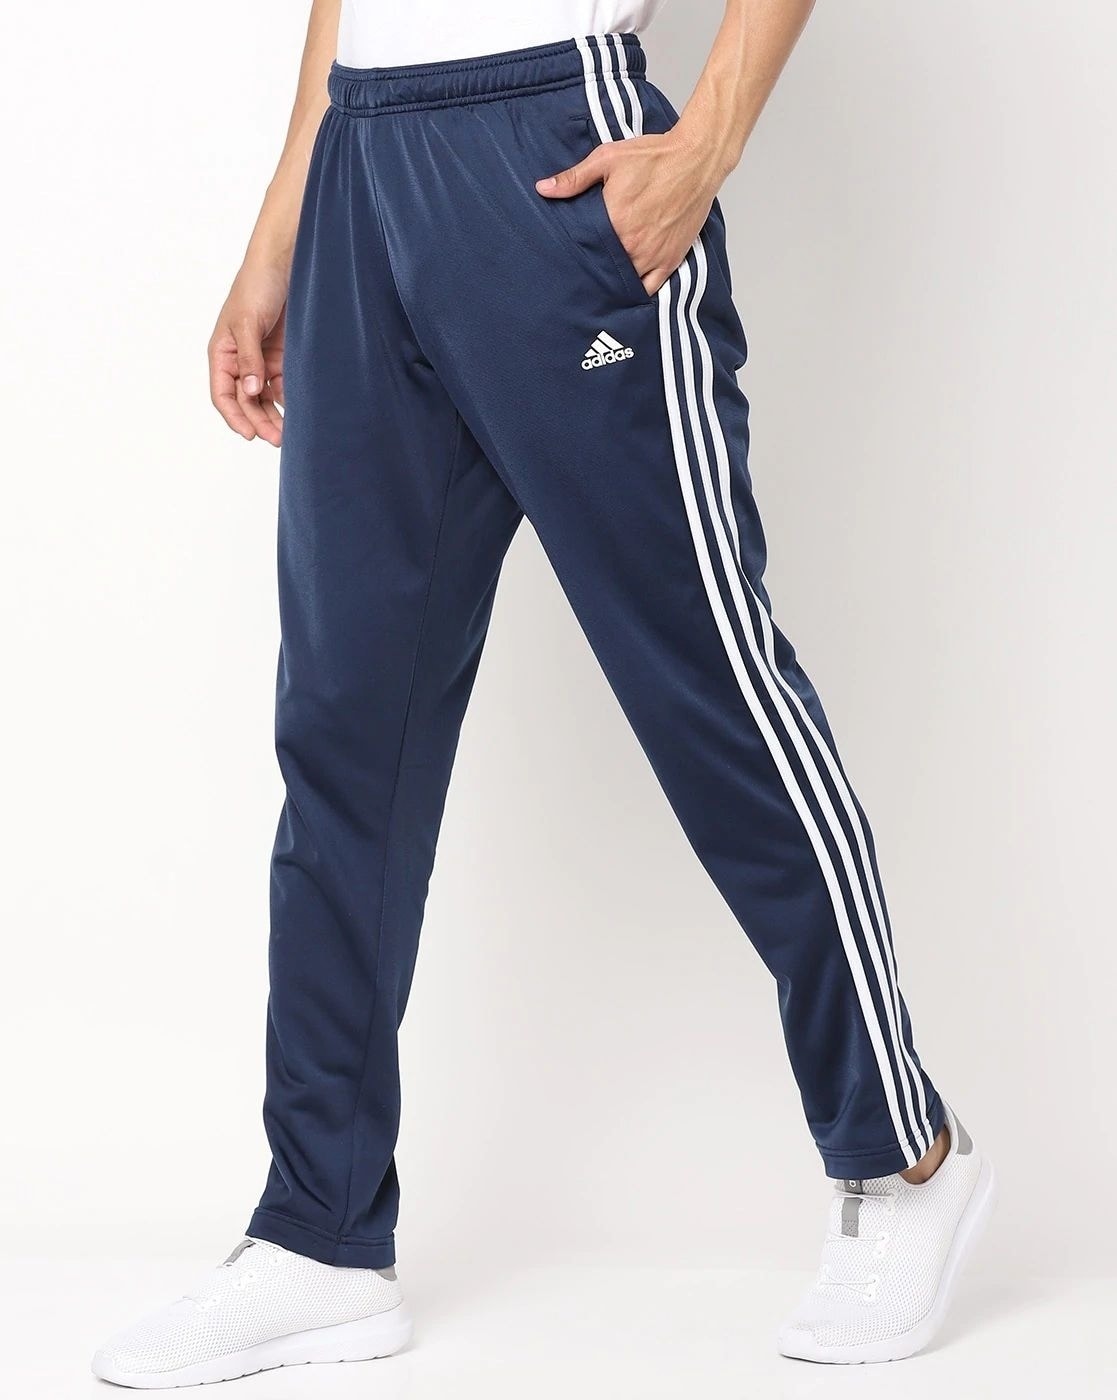 Buy Blue Track Pants for Men by ADIDAS Online  Ajiocom